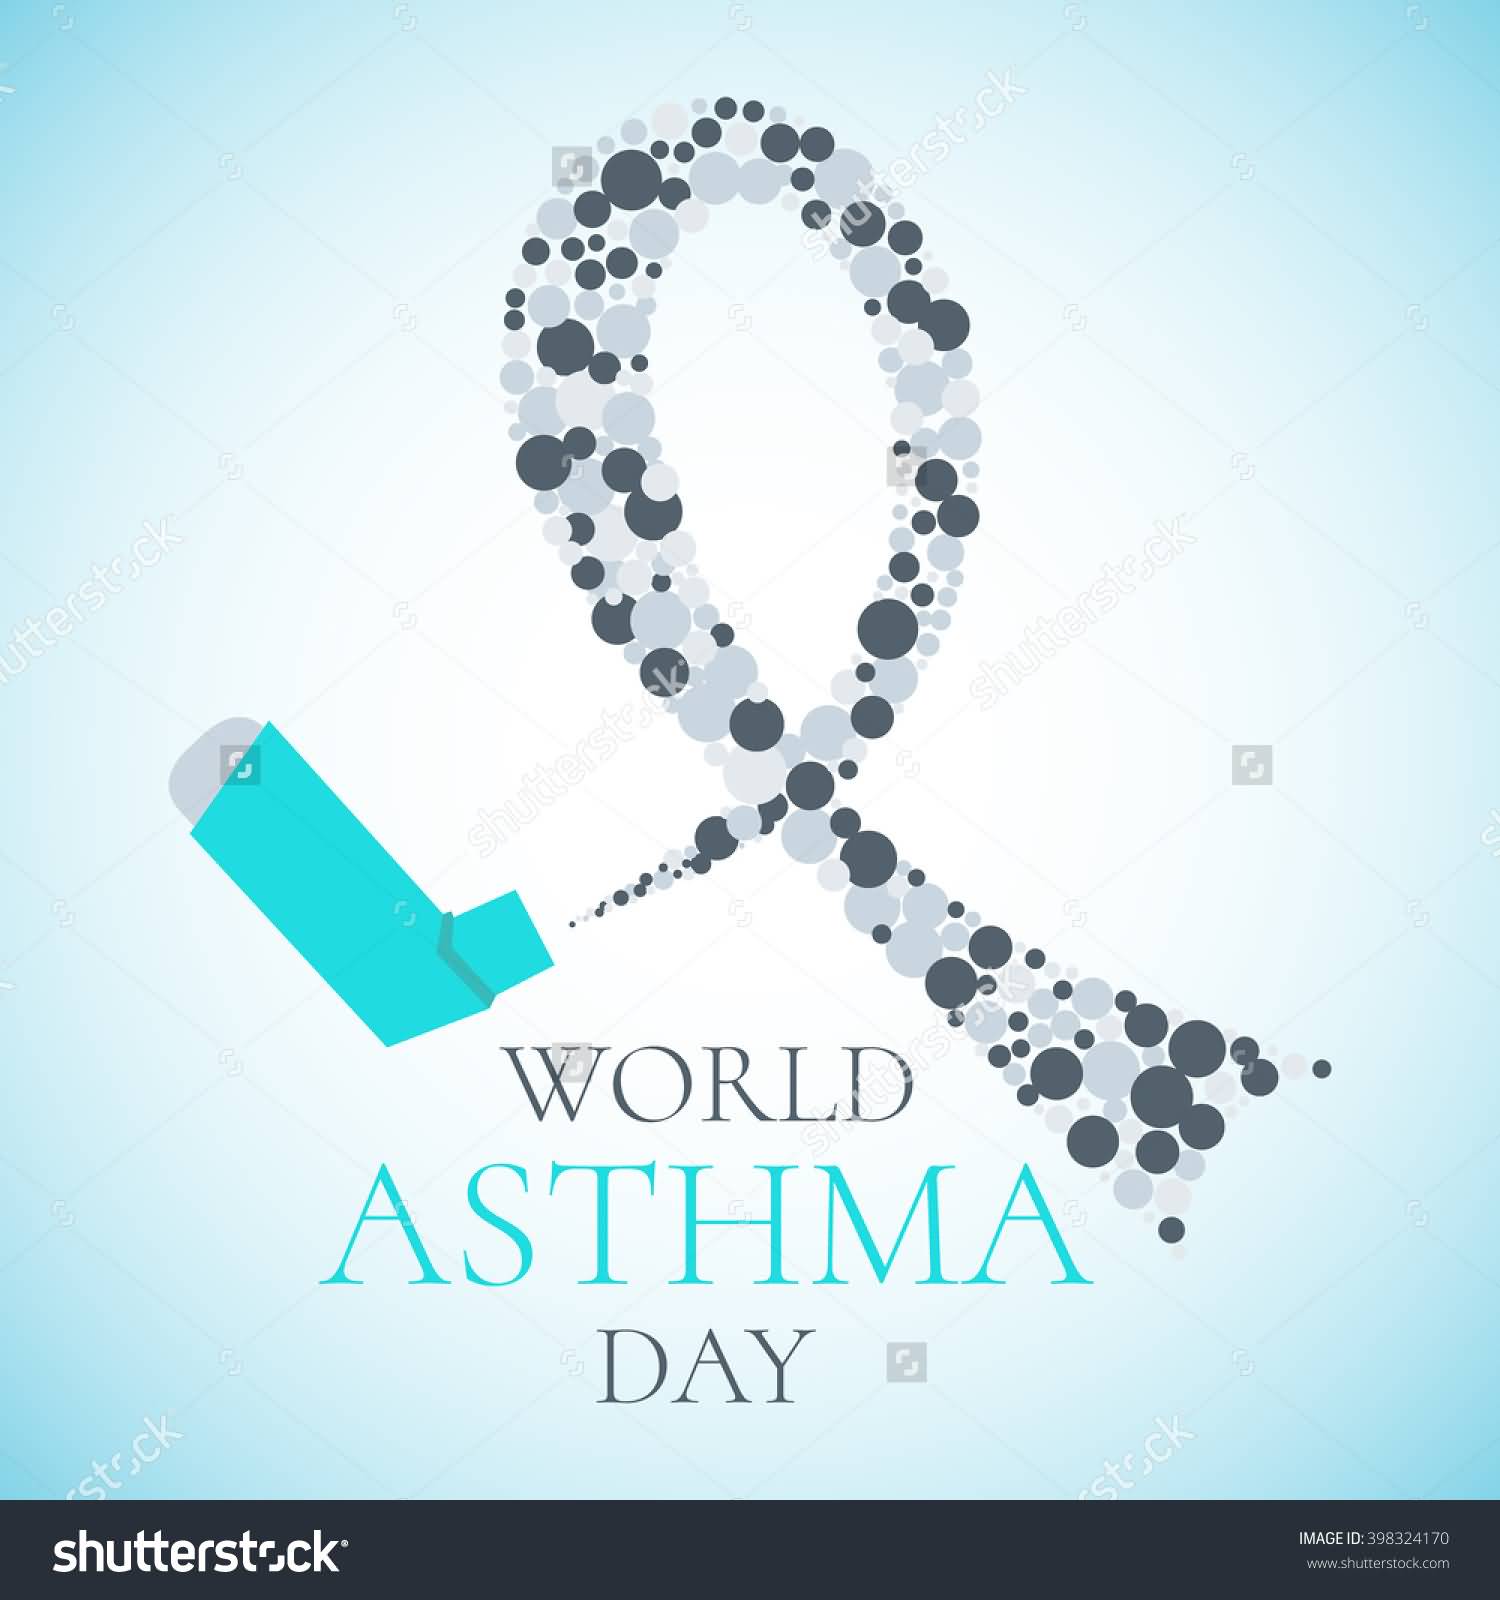 World Asthma Day Pump Illustration